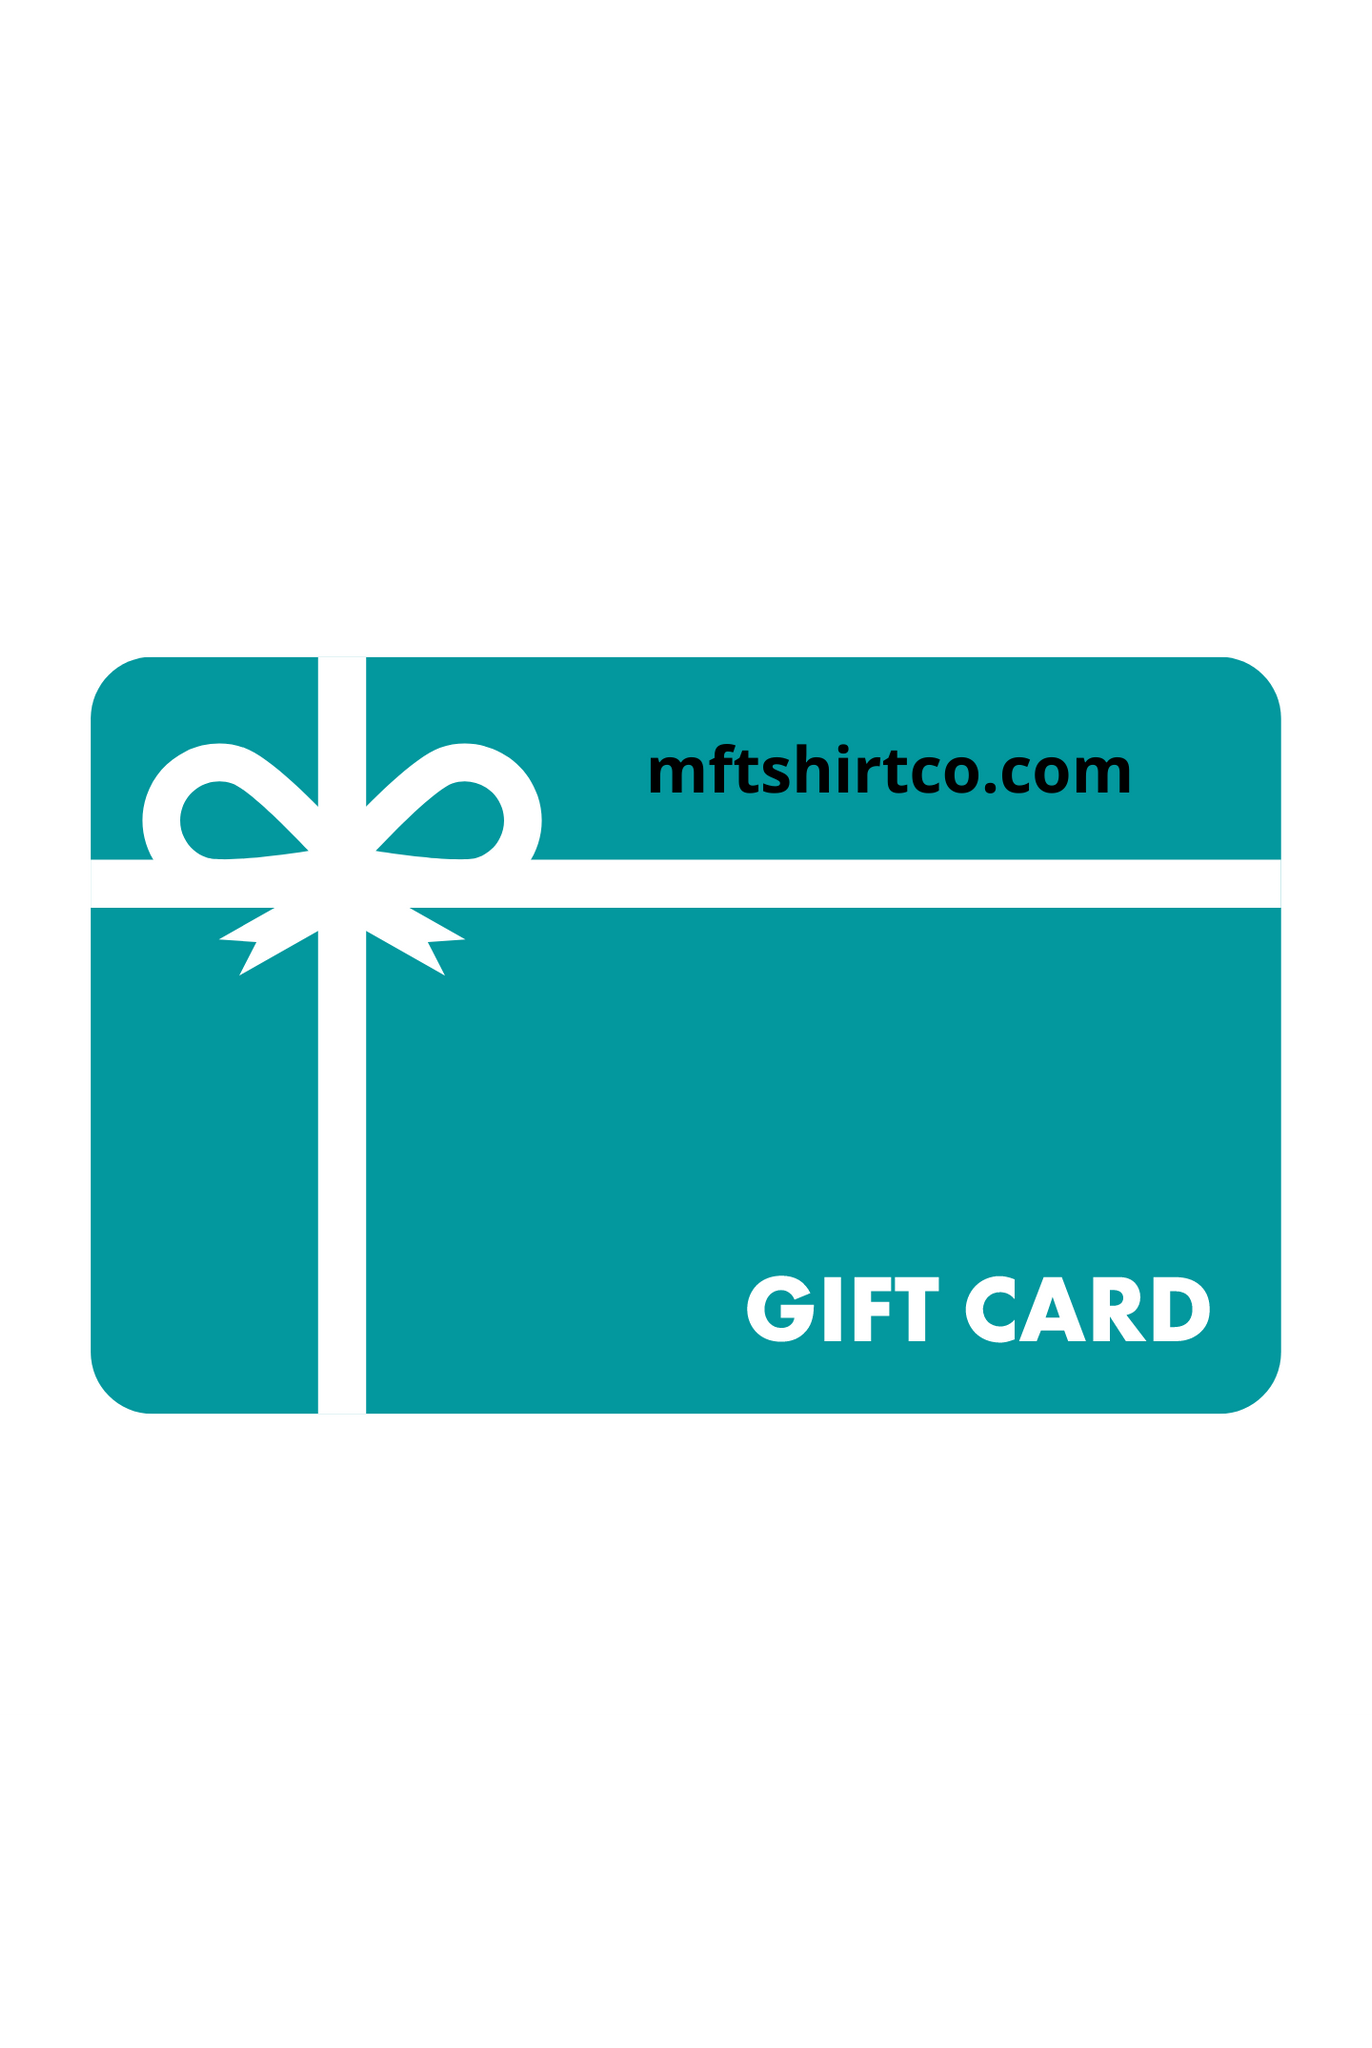 $MFTSHIRT COMPANY GIFT CARD